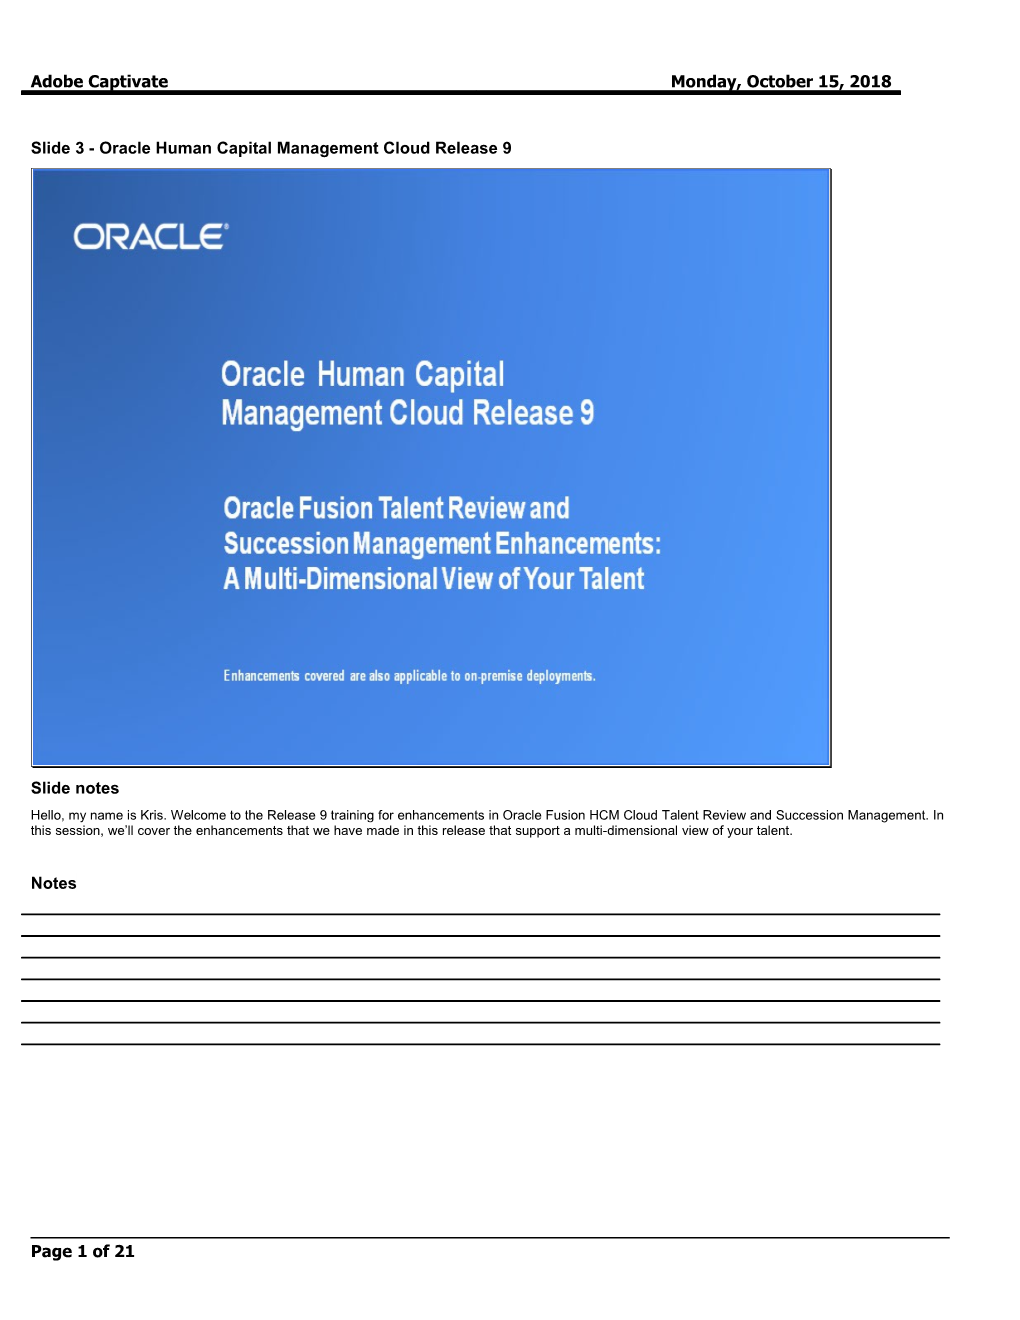 Slide 3 - Oracle Human Capital Management Cloud Release 9